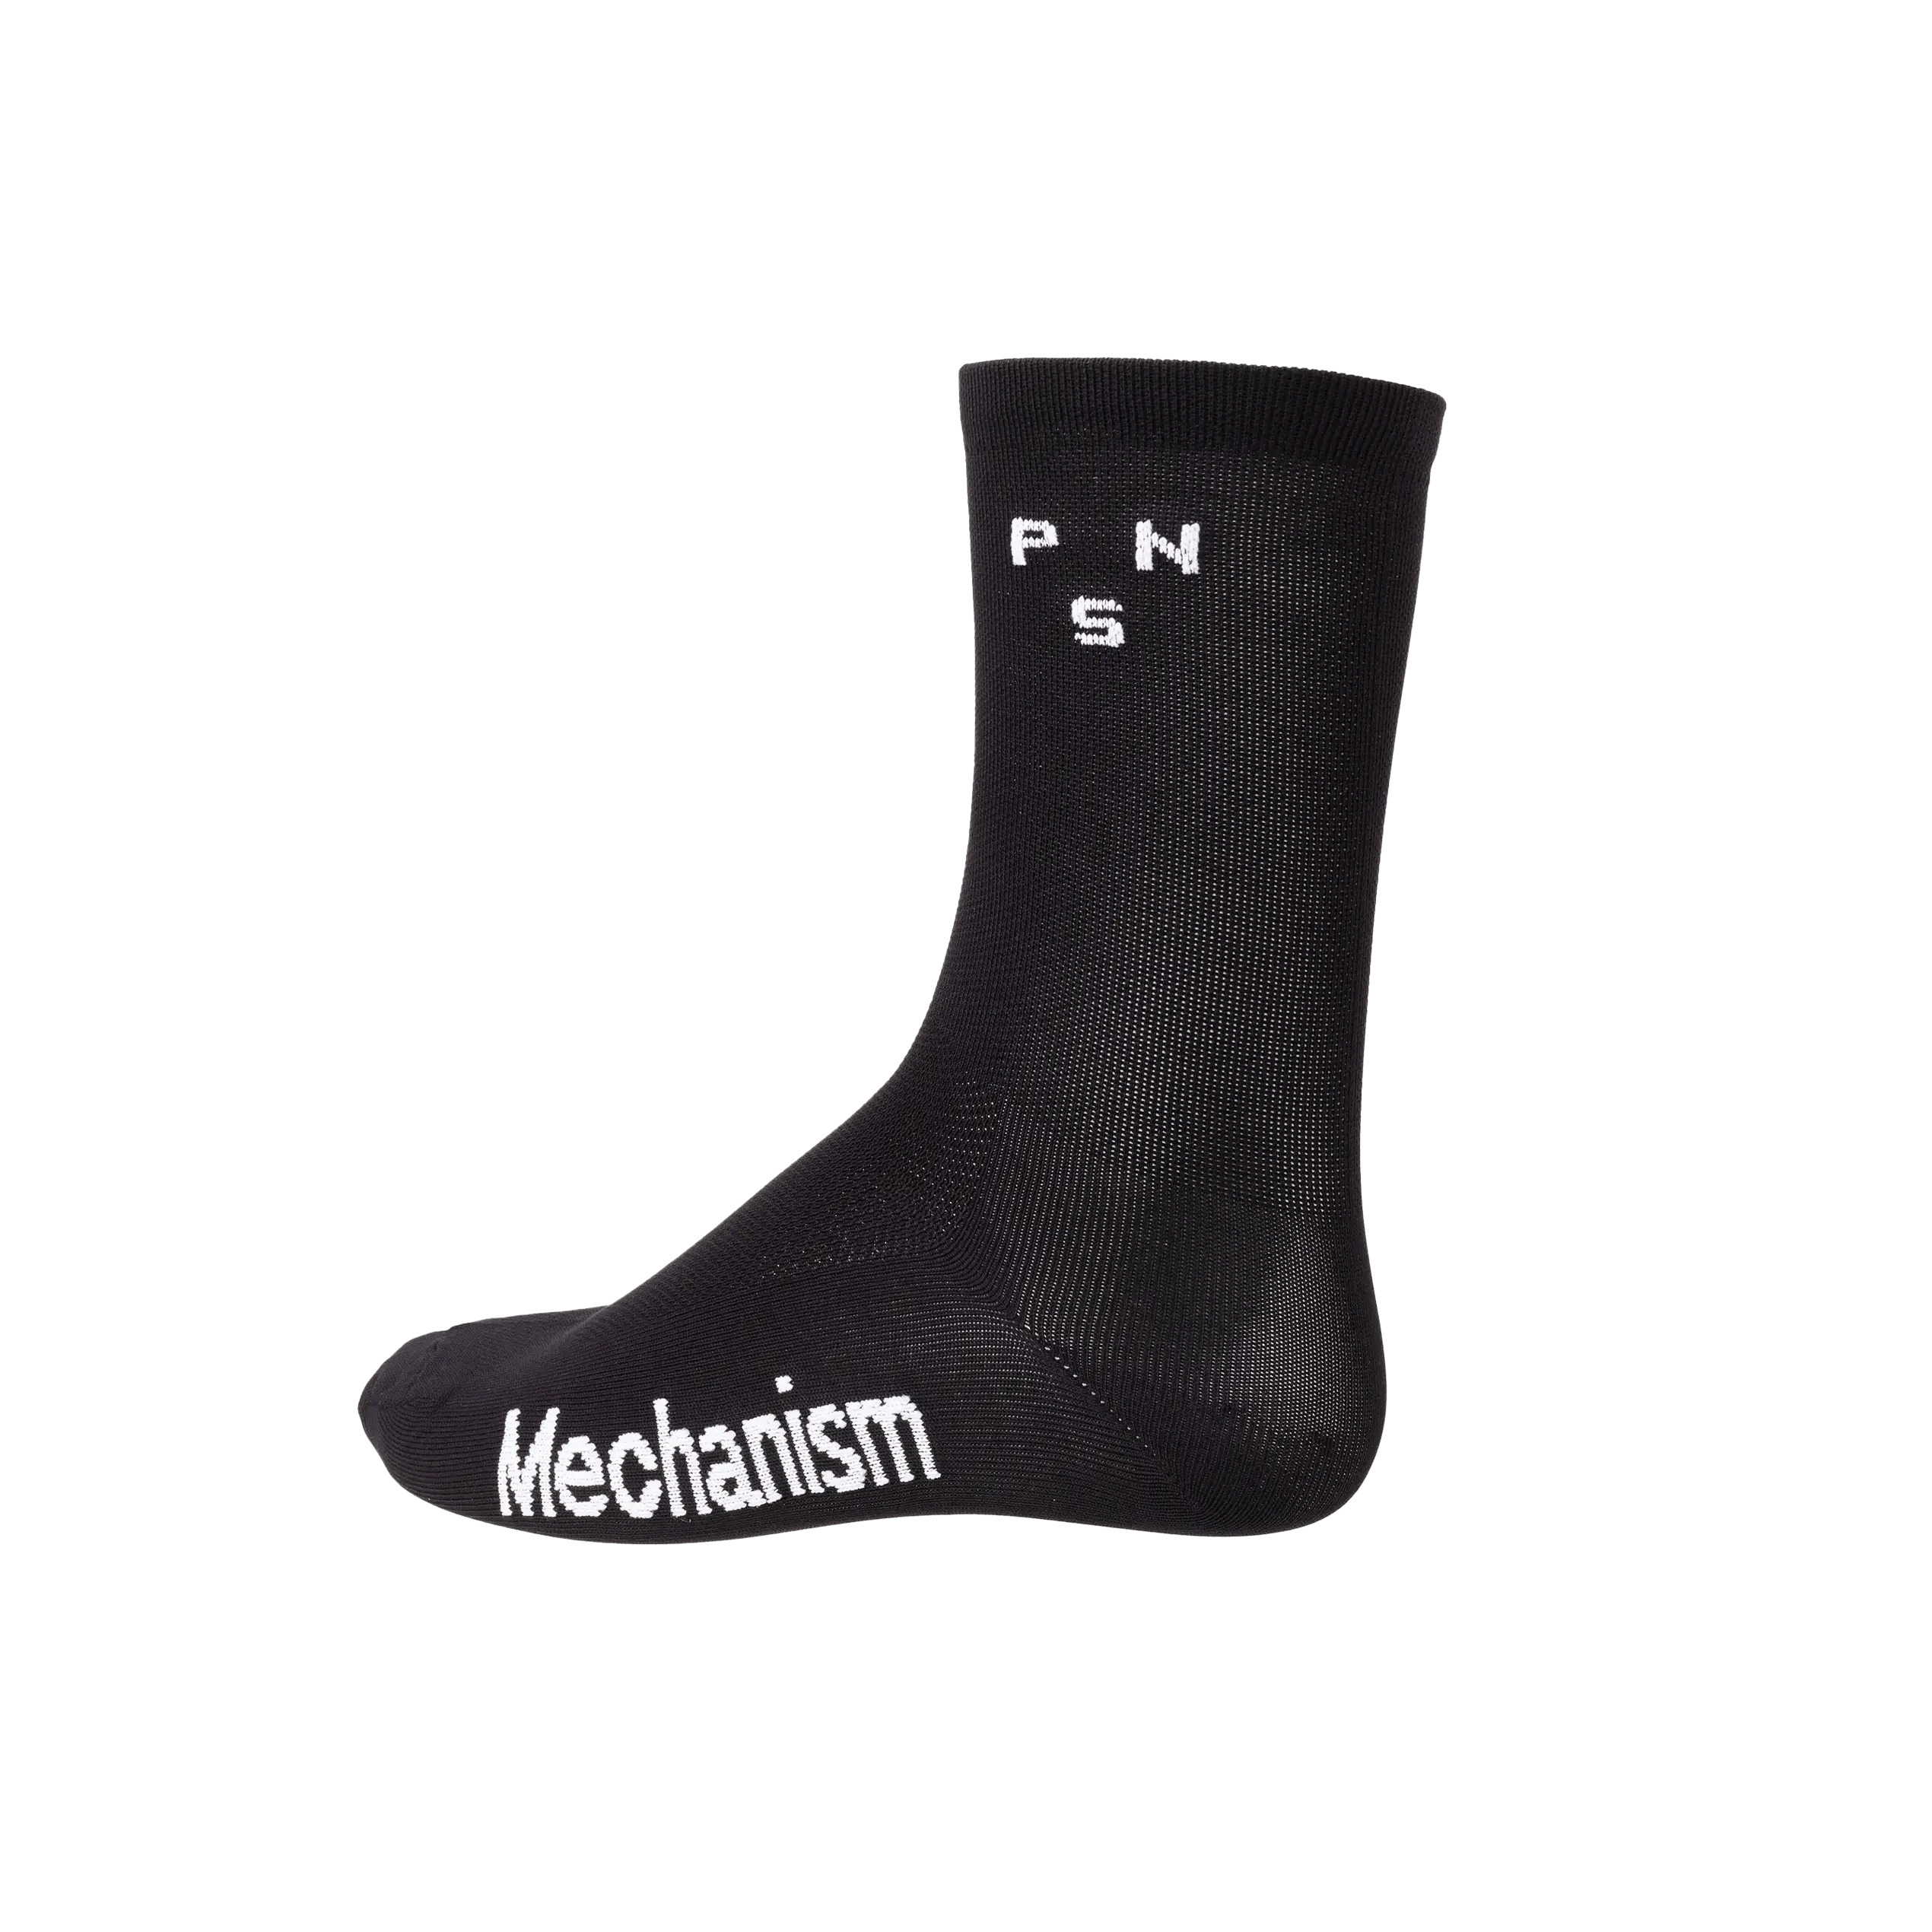 Mechanism Socks - Black - Threshold Coffee